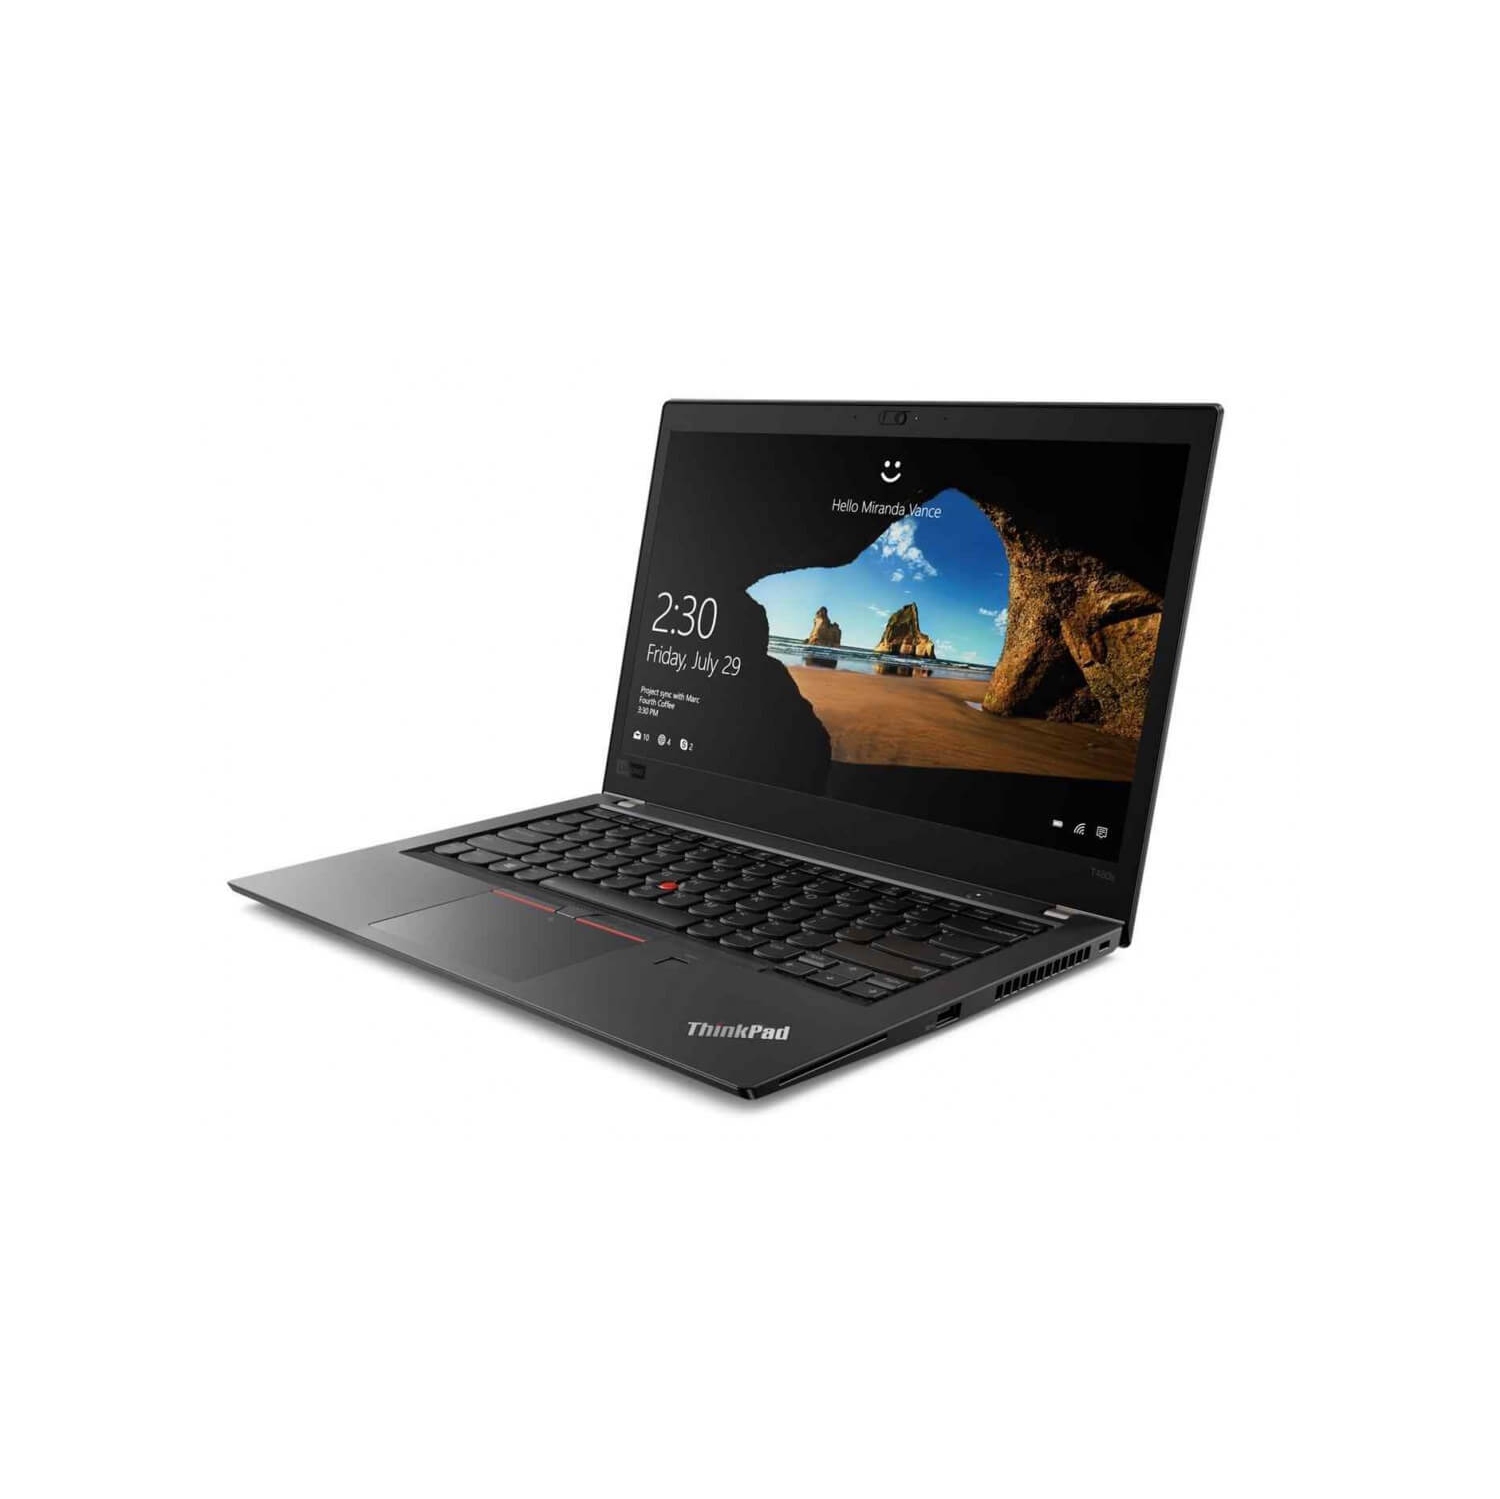 Refurbished (Good) - Lenovo ThinkPad X270 Laptop Intel Core i5 - 8GB DDR4 Ram - New 256 SSD - W10Pro(Grade A) - 1 Year Manufacturer Warranty